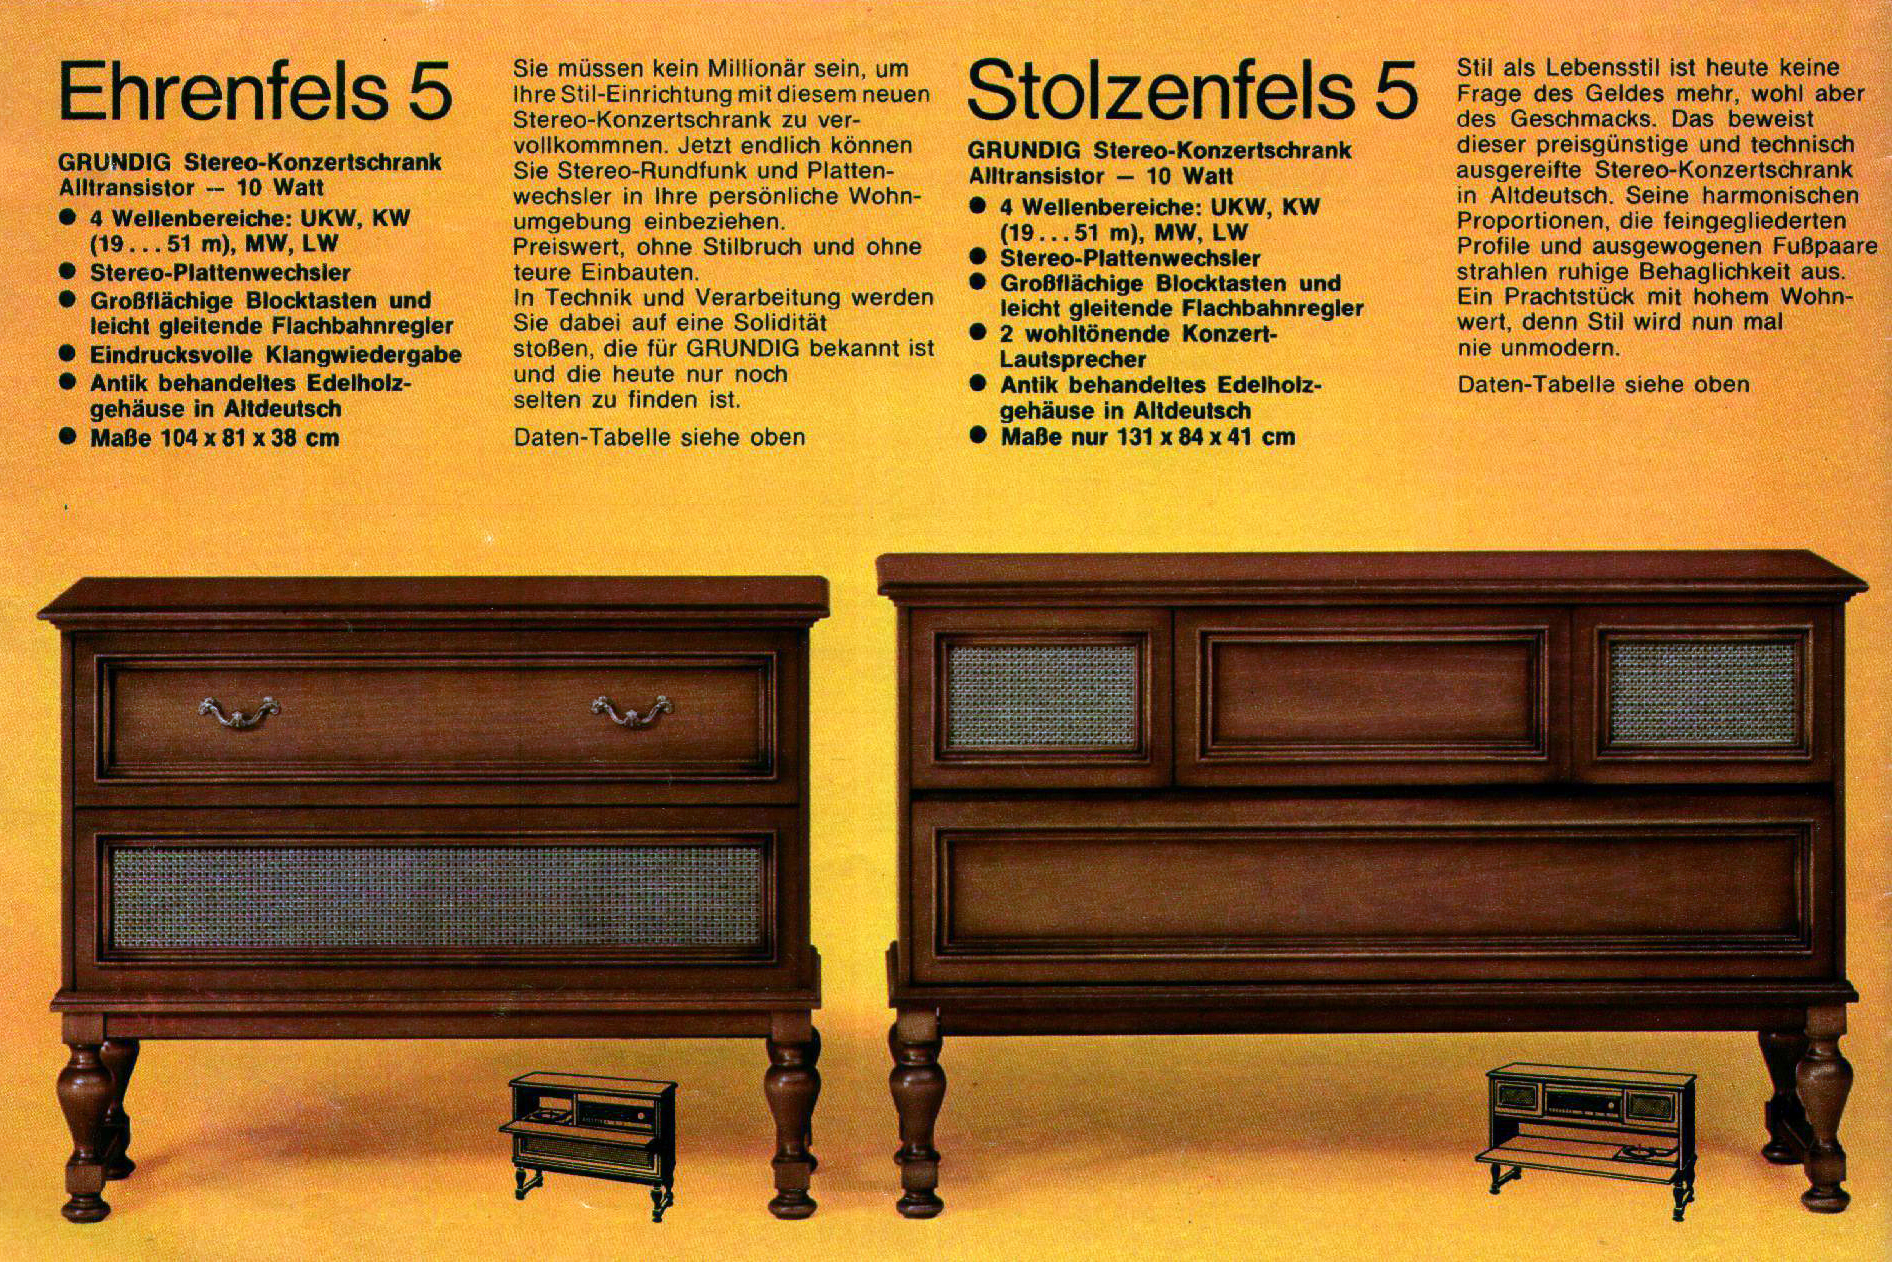 Grundig Ehrenfels-Stolzenfels 5-Prospekt-1972.jpg